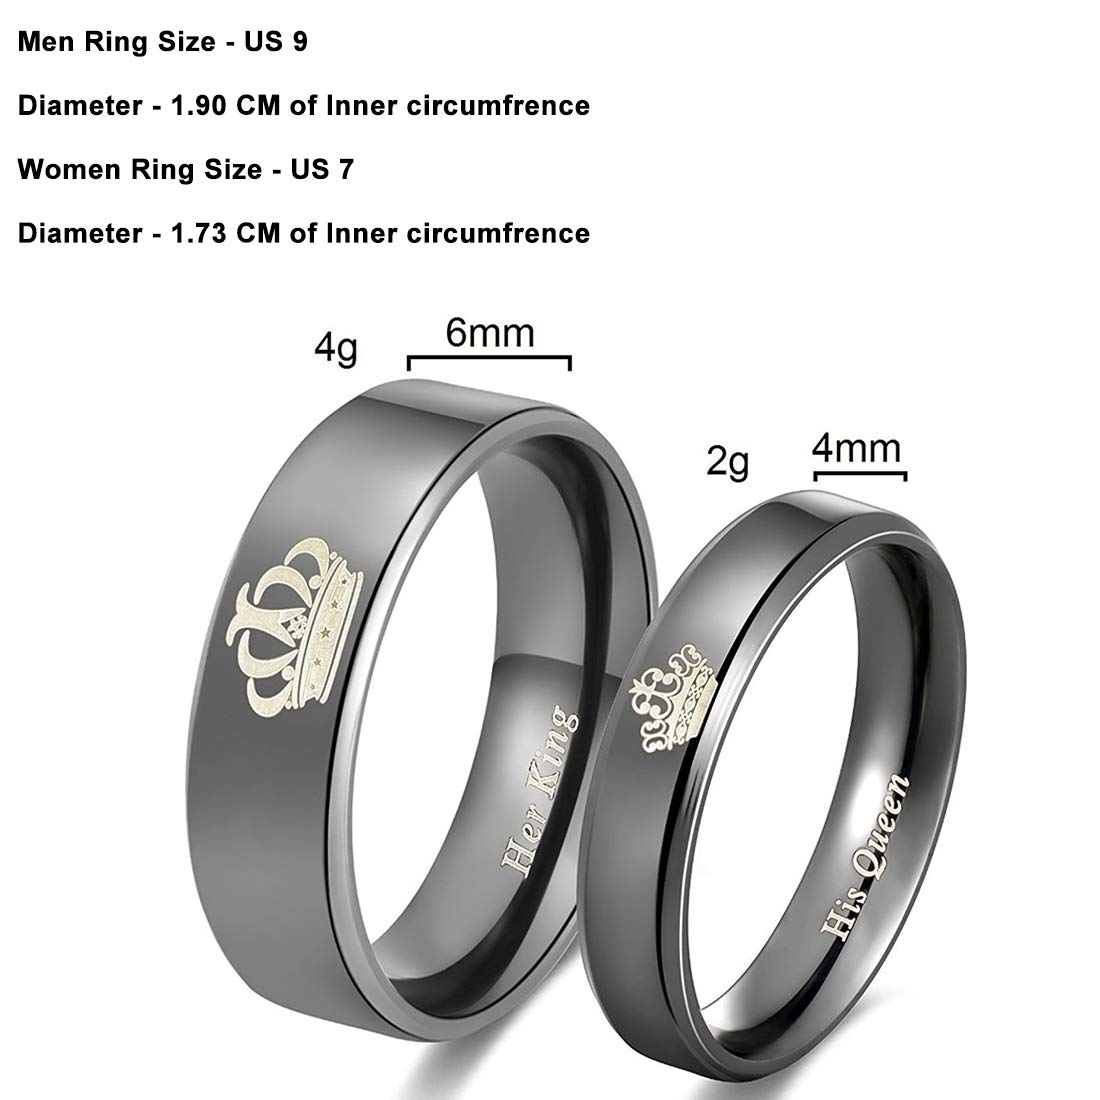 Top more than 233 7 cm diameter ring size